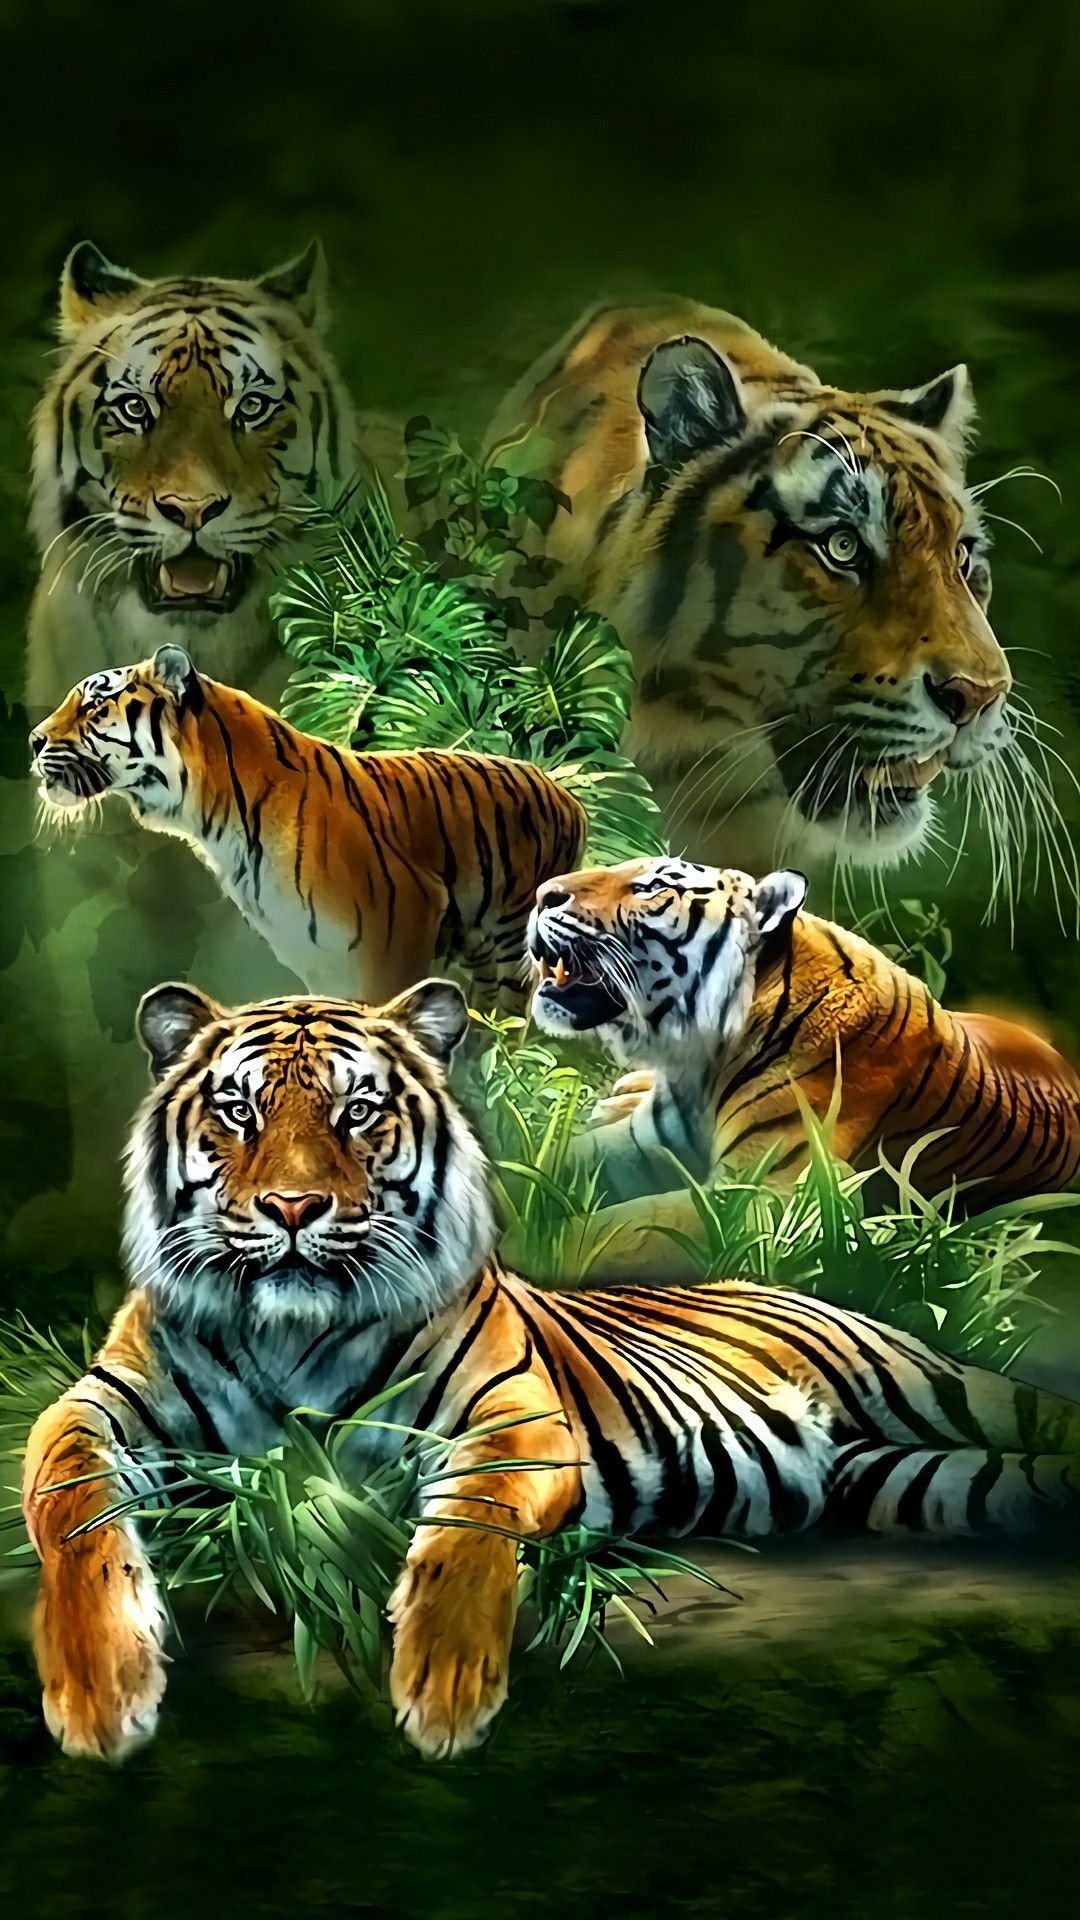 Aesthetic bengal tiger Wallpaper Download